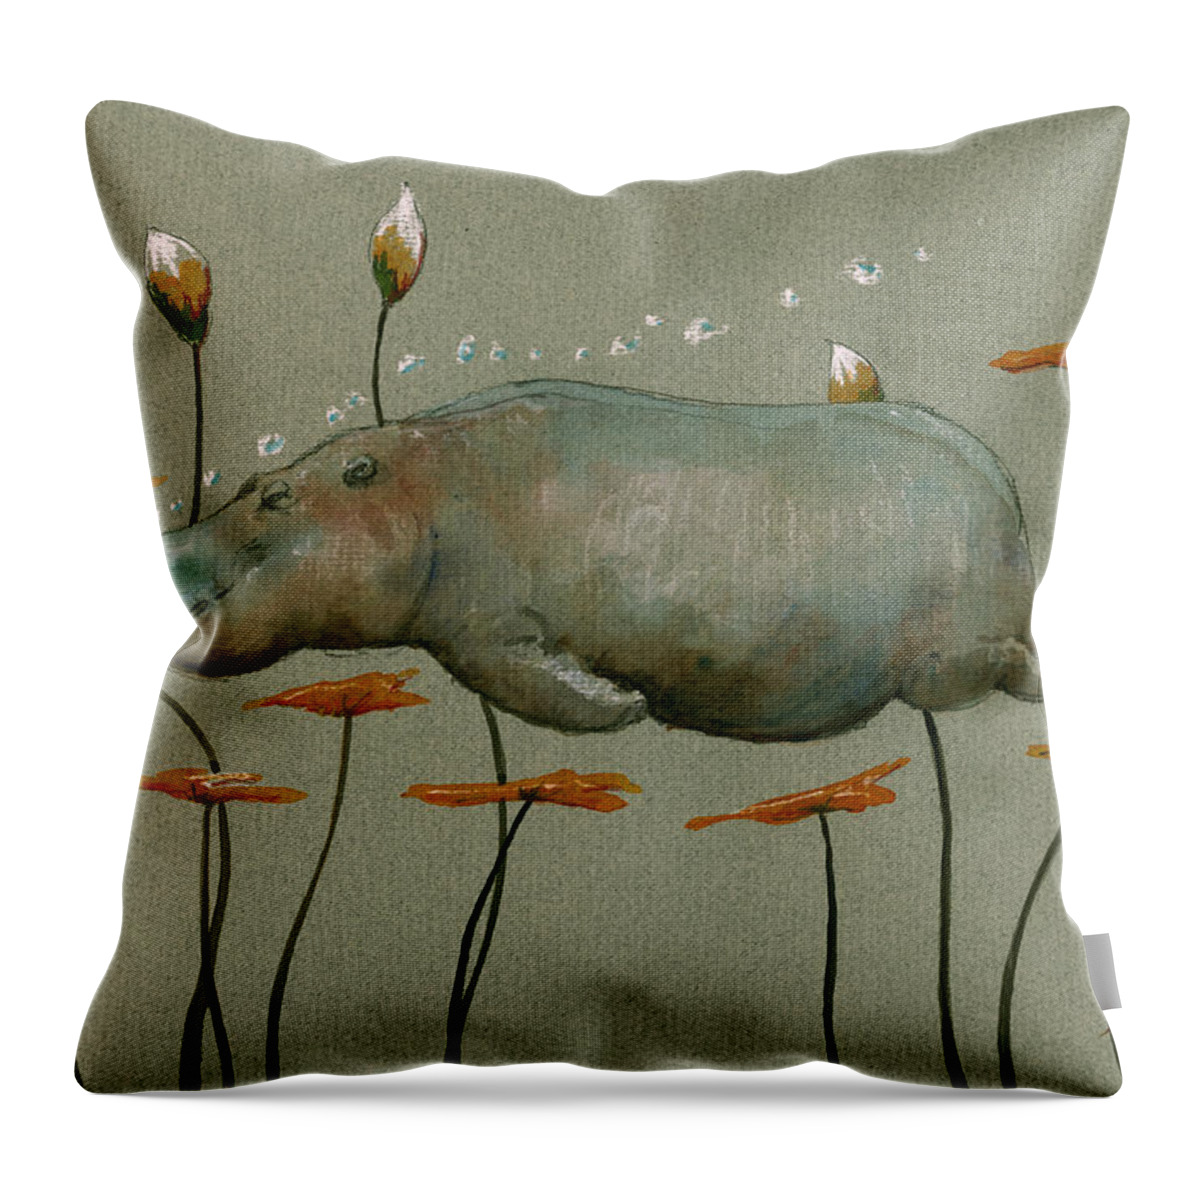 Hippopotamus Art Throw Pillow featuring the painting Hippo underwater by Juan Bosco